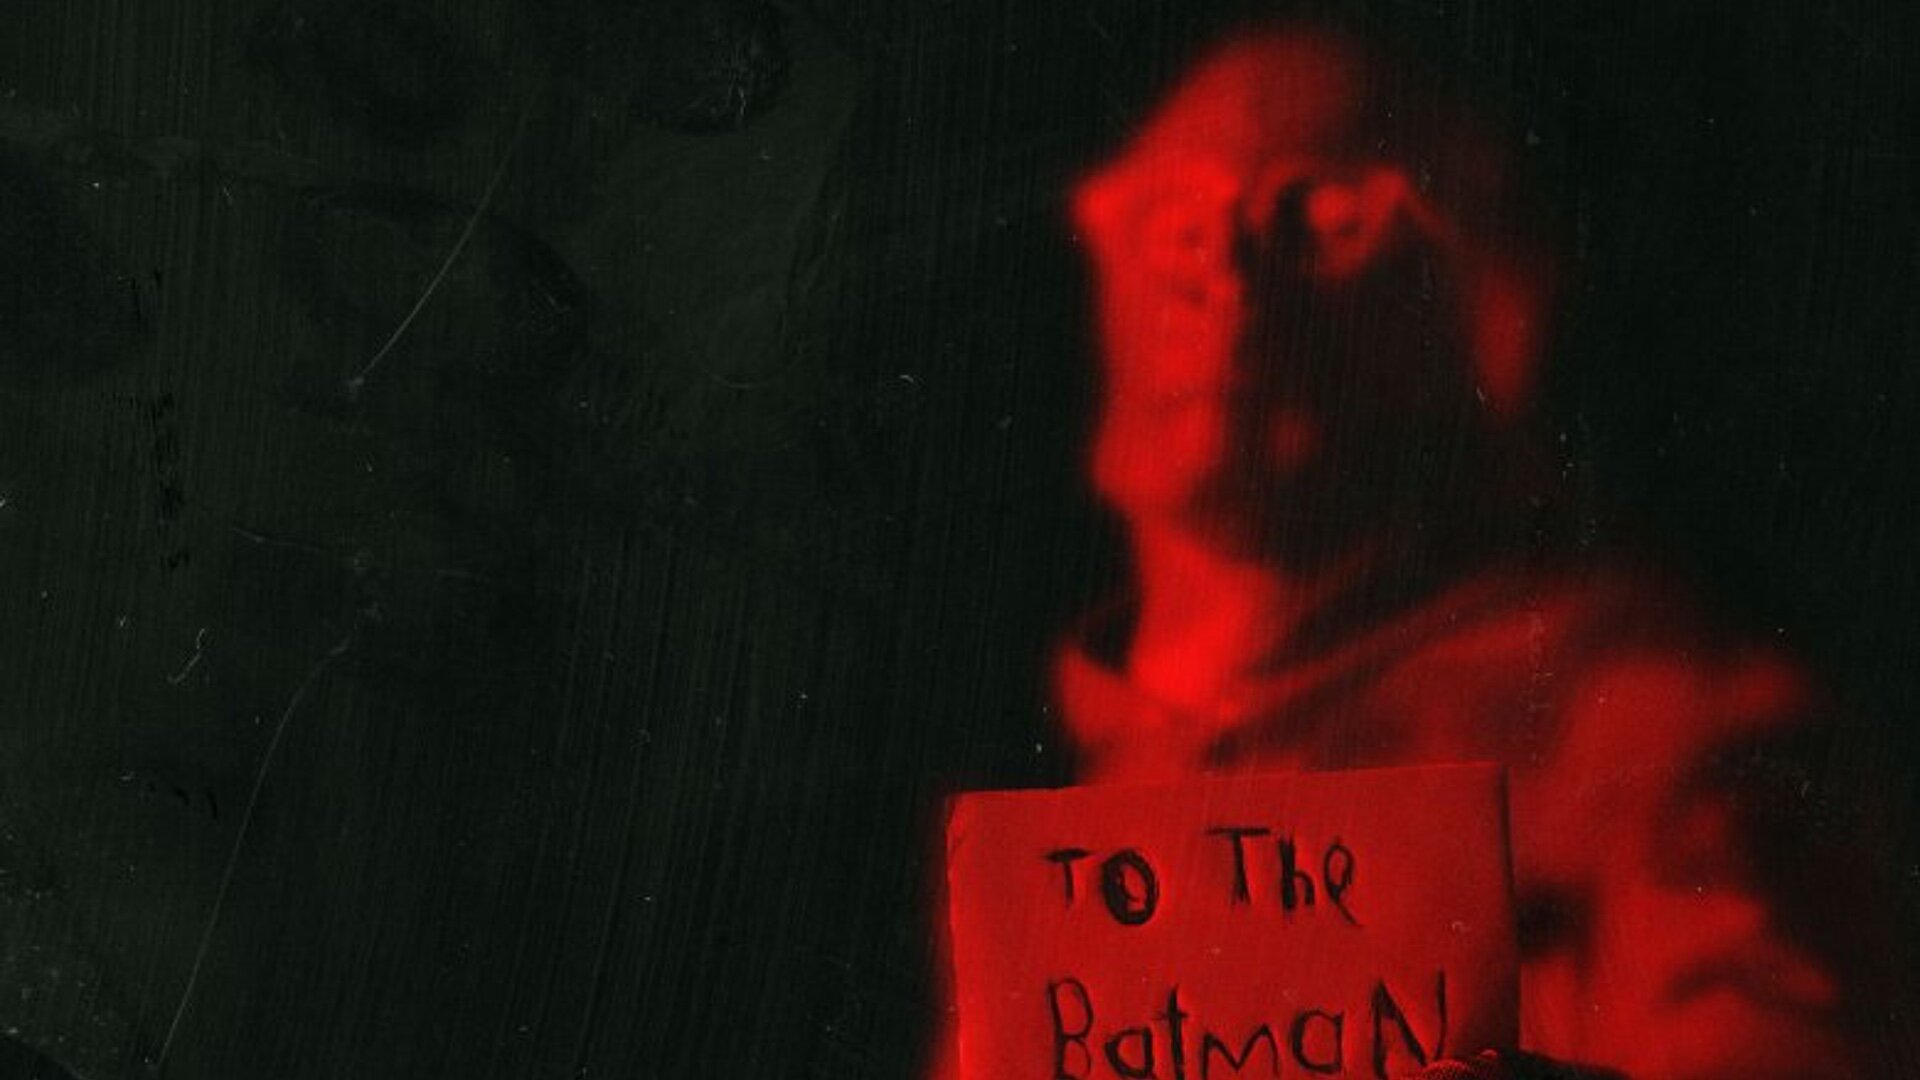 New Poster Art For THE BATMAN Features Batman and Riddler